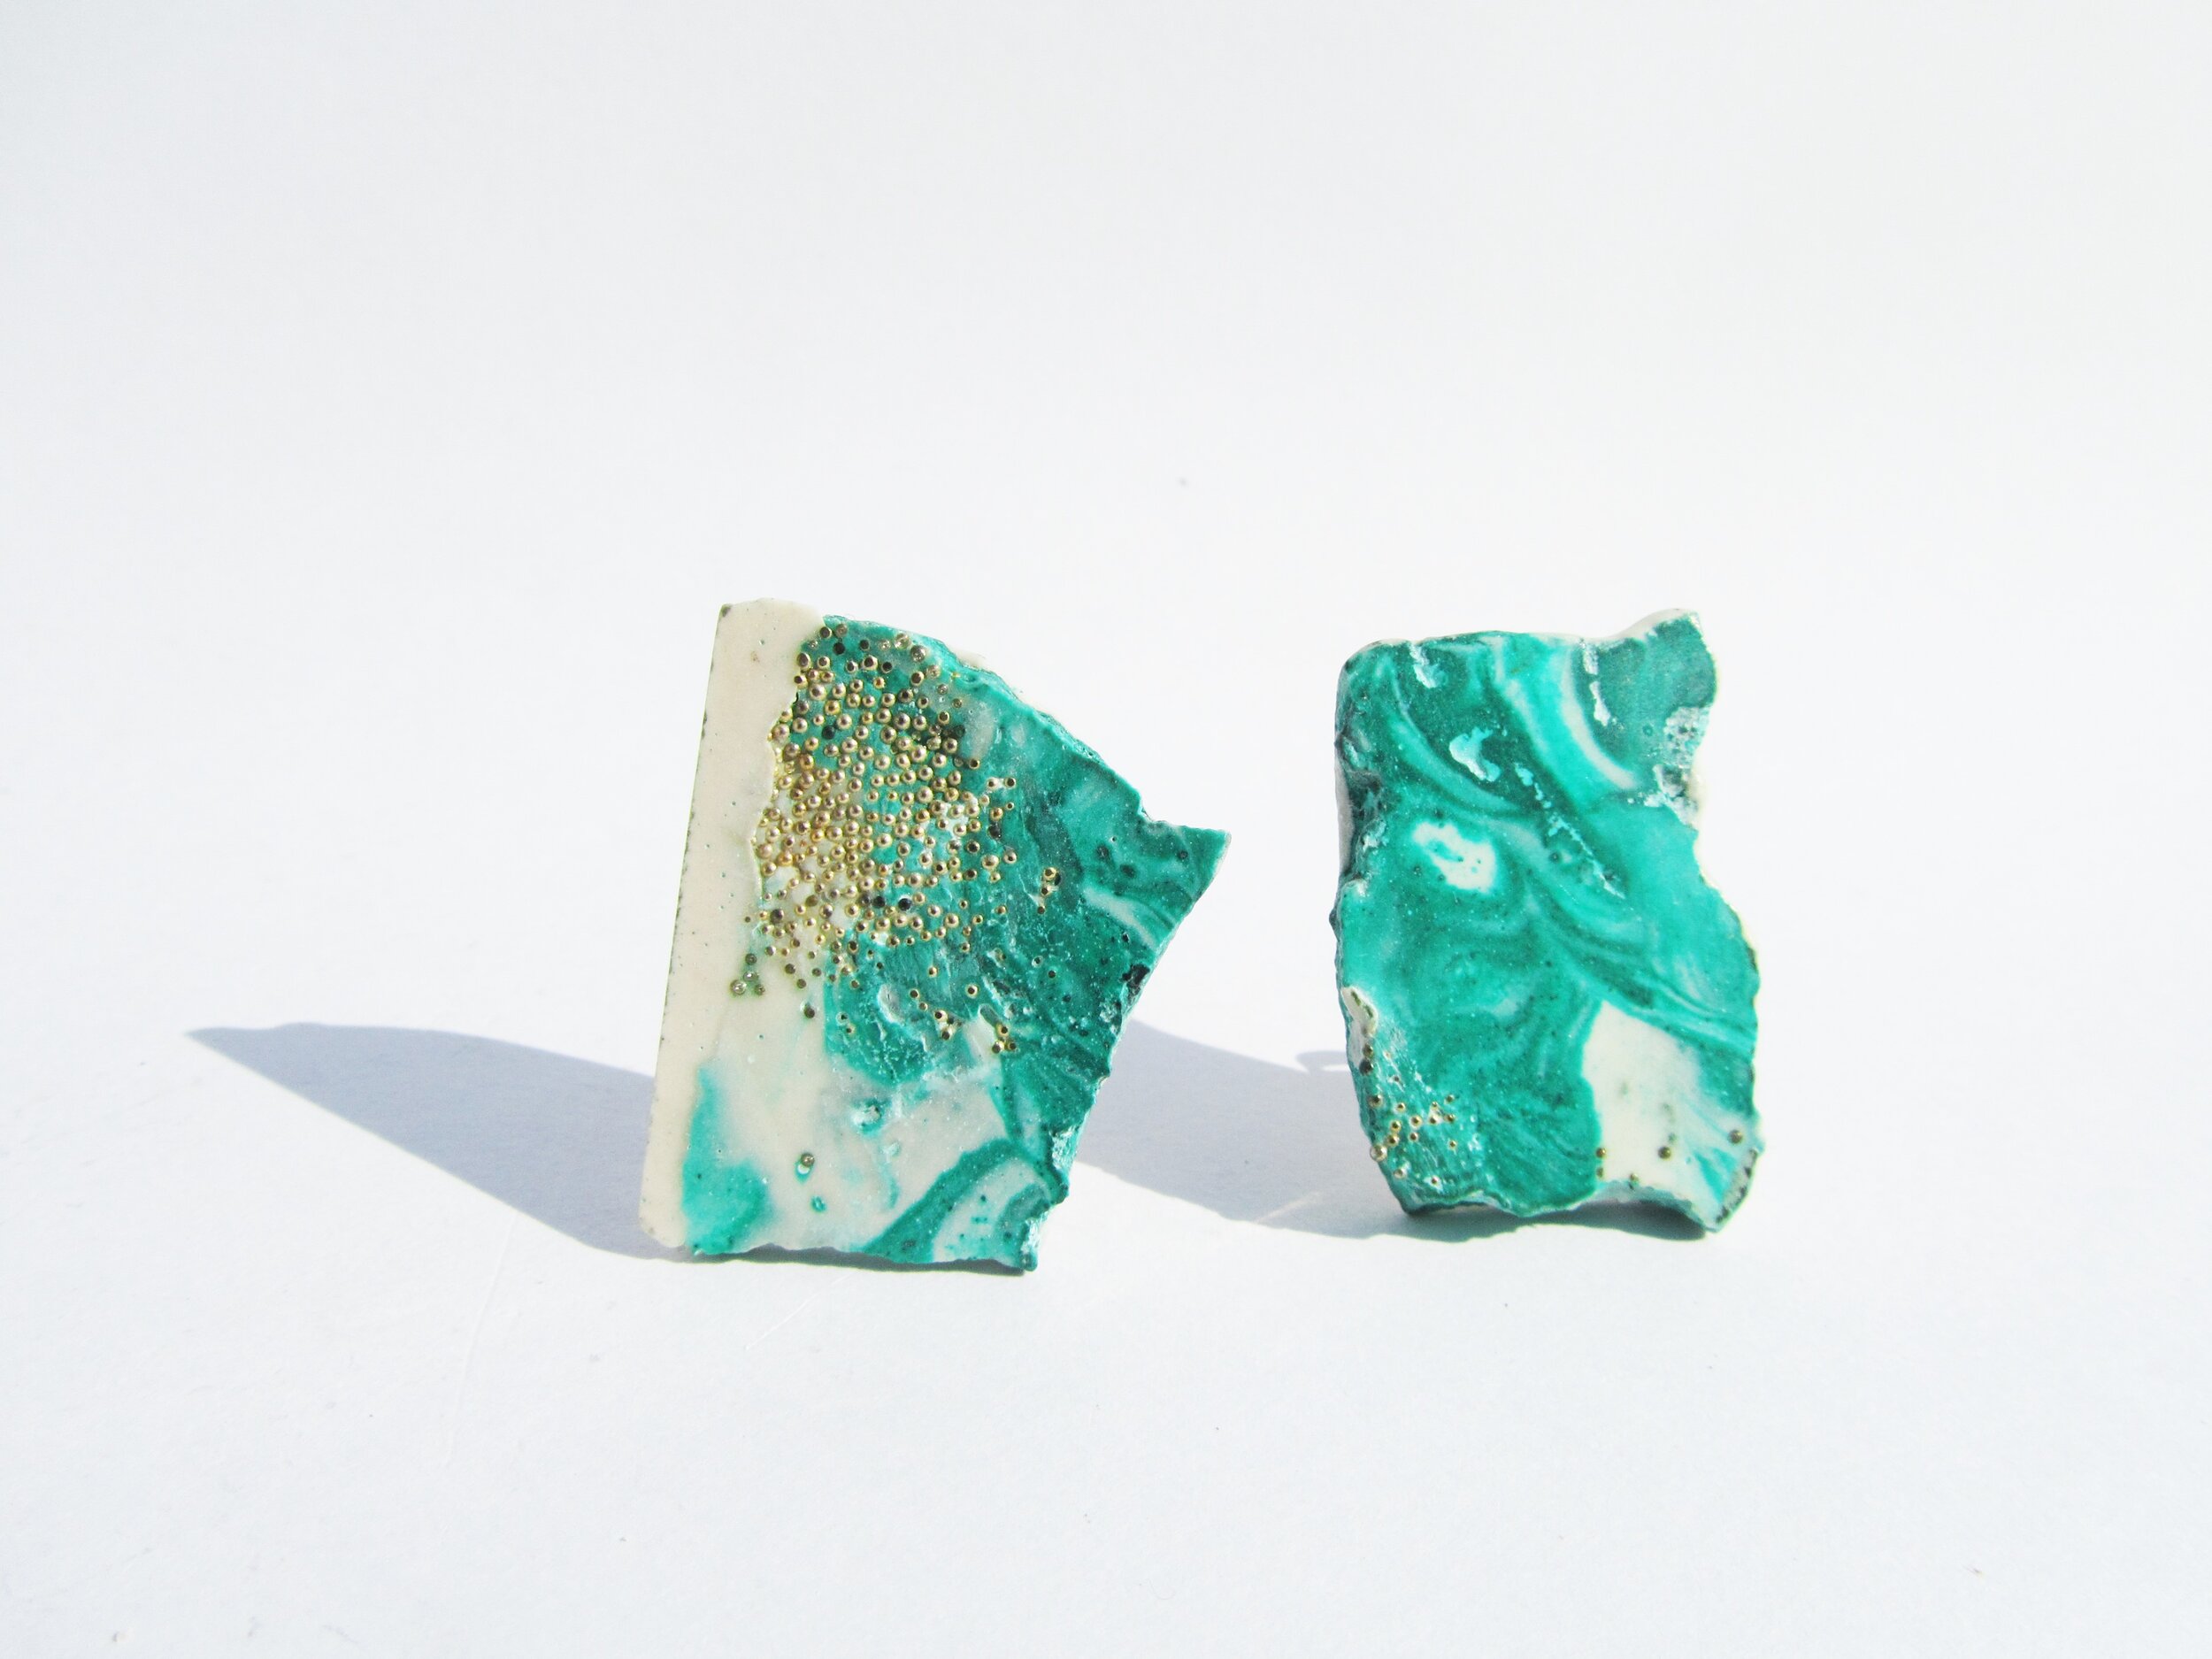 jade mellor malachite resin gold flecked earrings recycled fragments.JPG